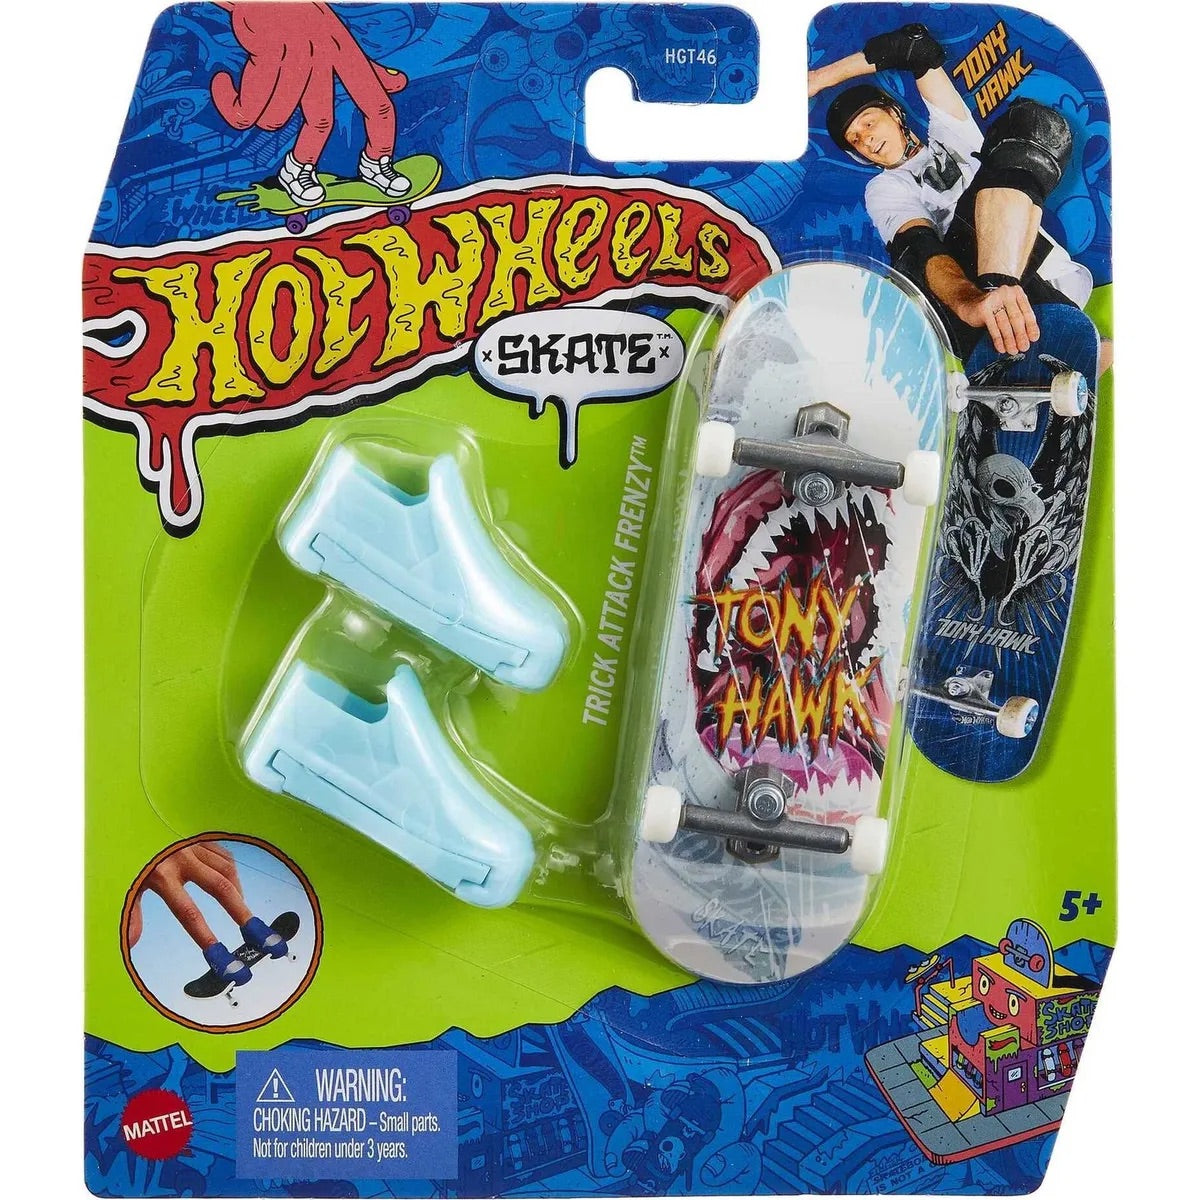 Hot Wheels Skate Tony Hawk Fingerboard & Skate Shoes - Trick Attack Frenzy by Mattel #HGT57